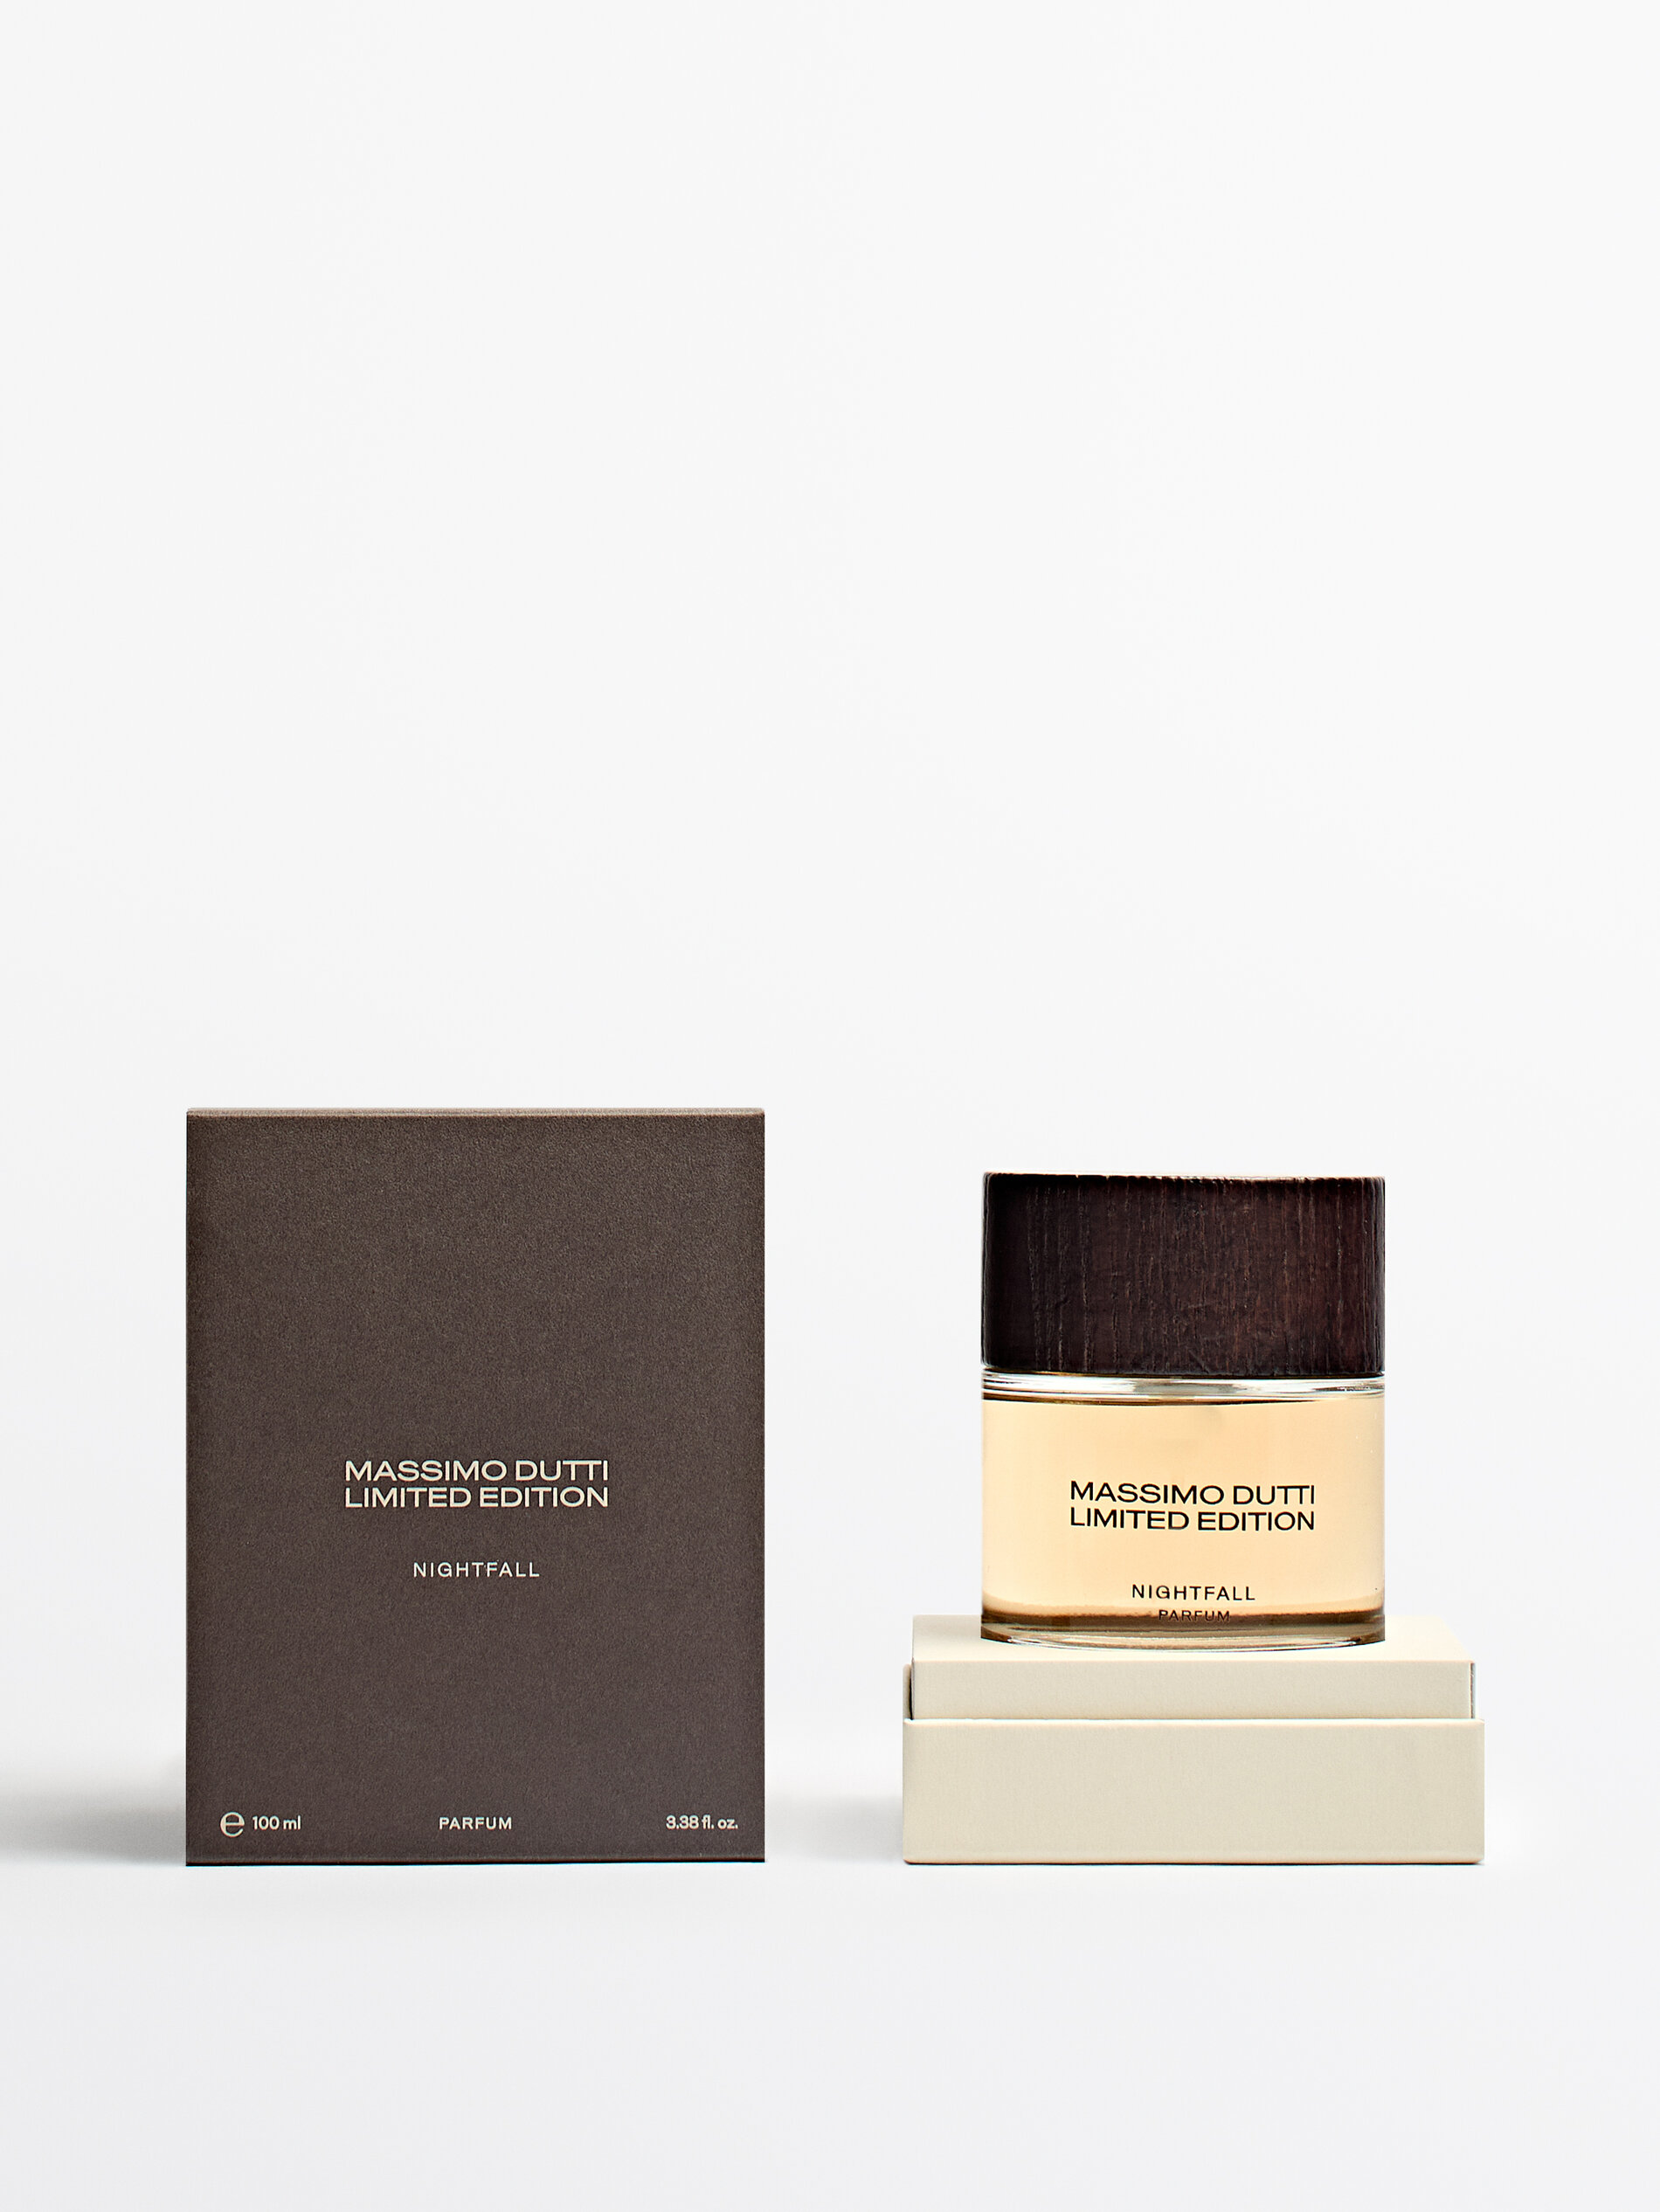 (100ml) Nightfall Limited Edition Parfum